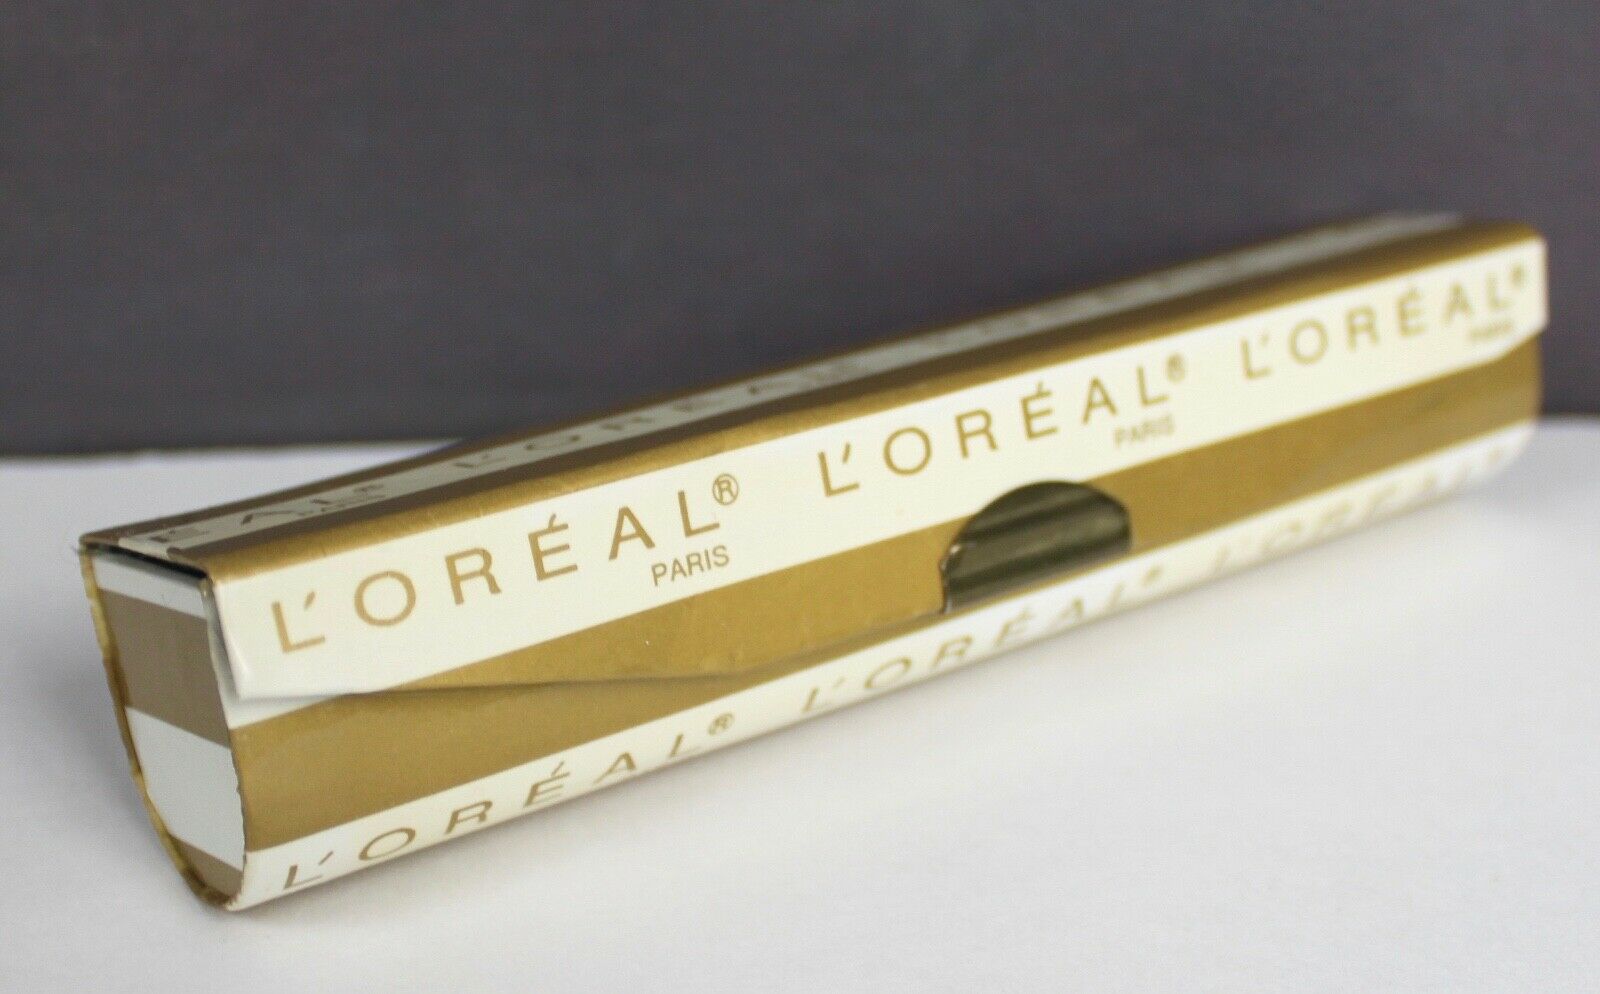 Vintage L'oreal Paris Lipstick Makeup Tube Holder With Mirror & Fabric Interior